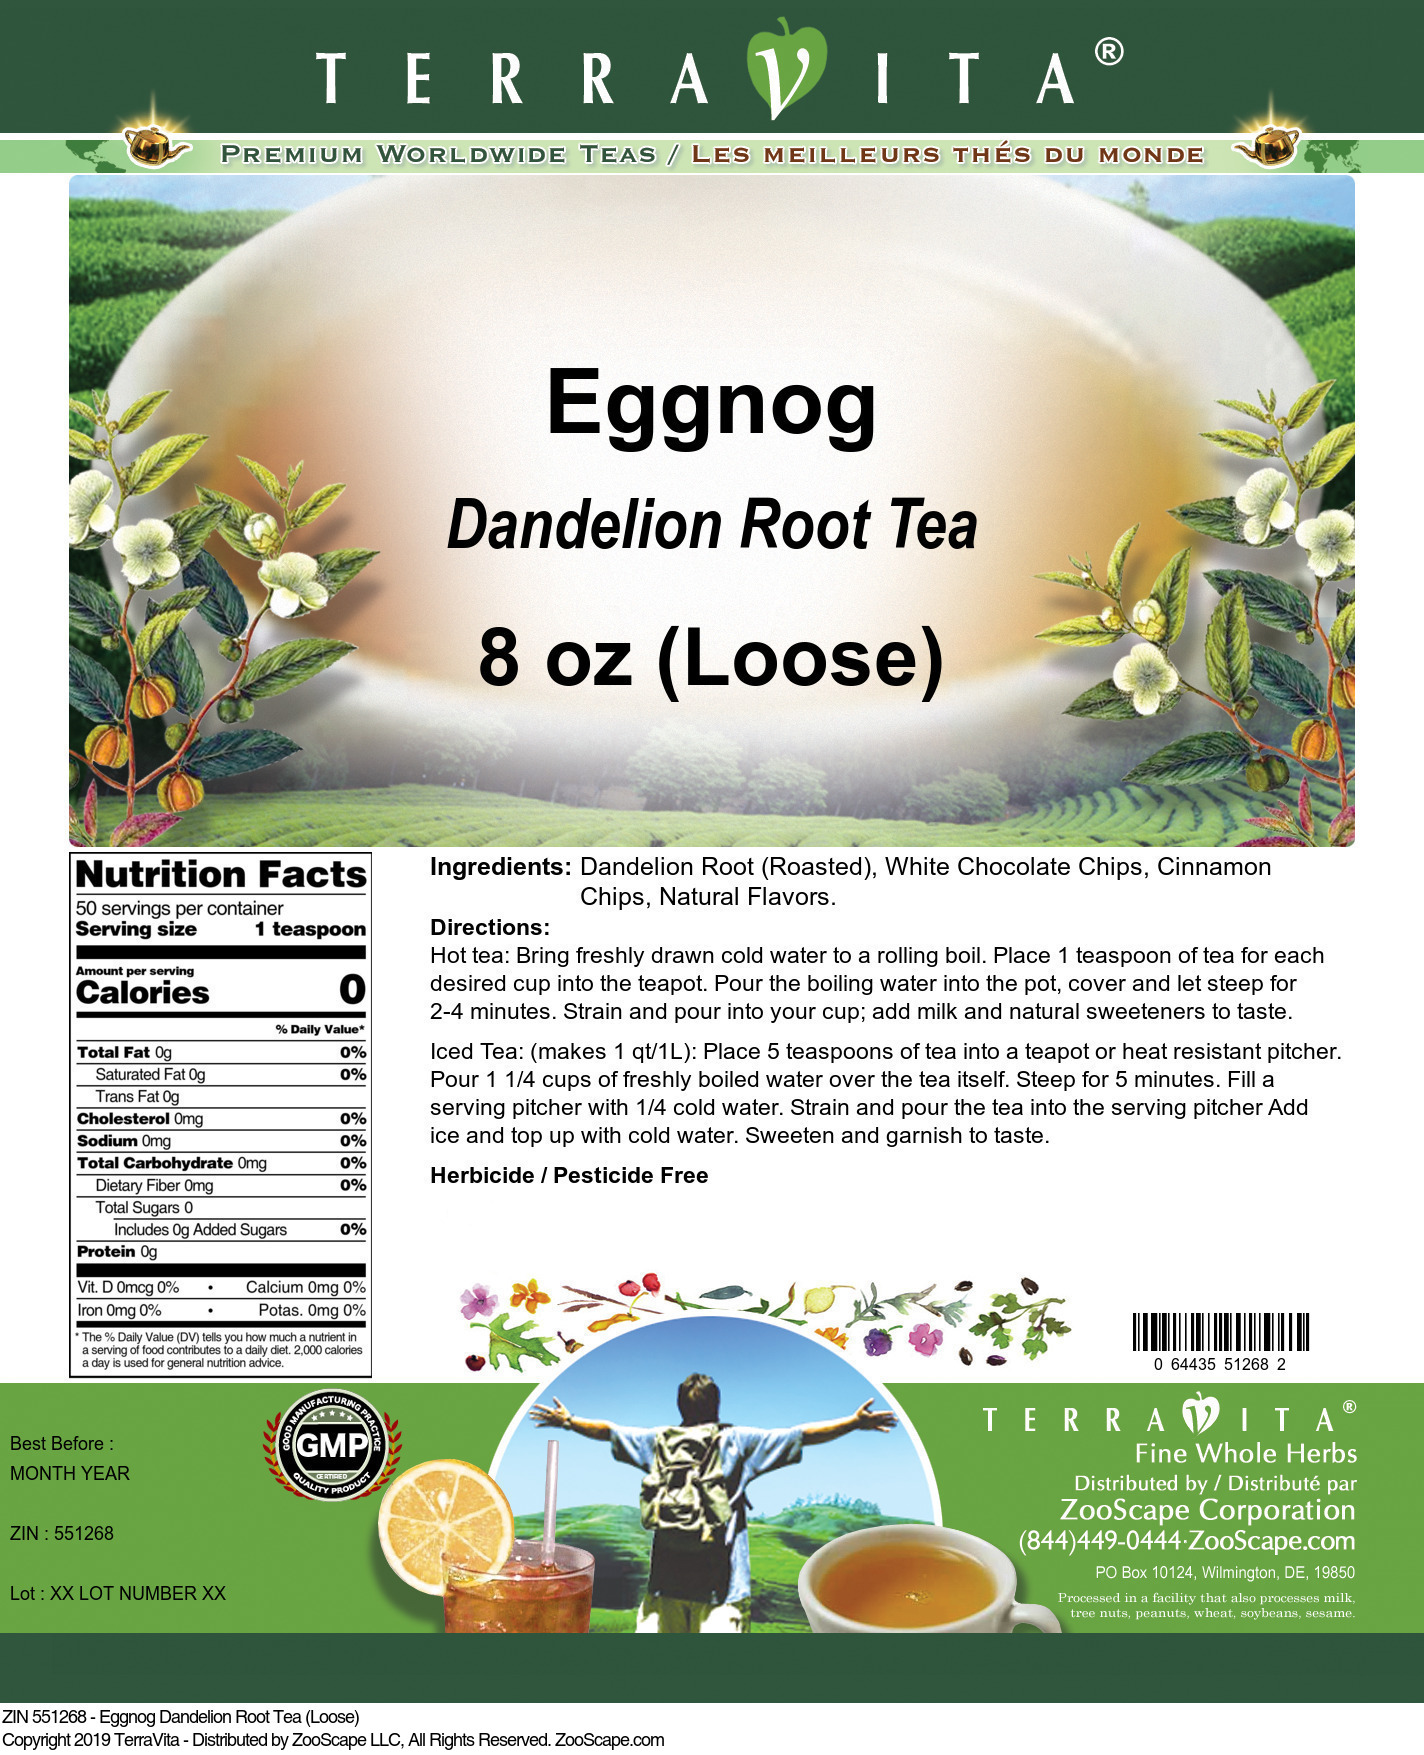 Eggnog Dandelion Root Tea (Loose) - Label